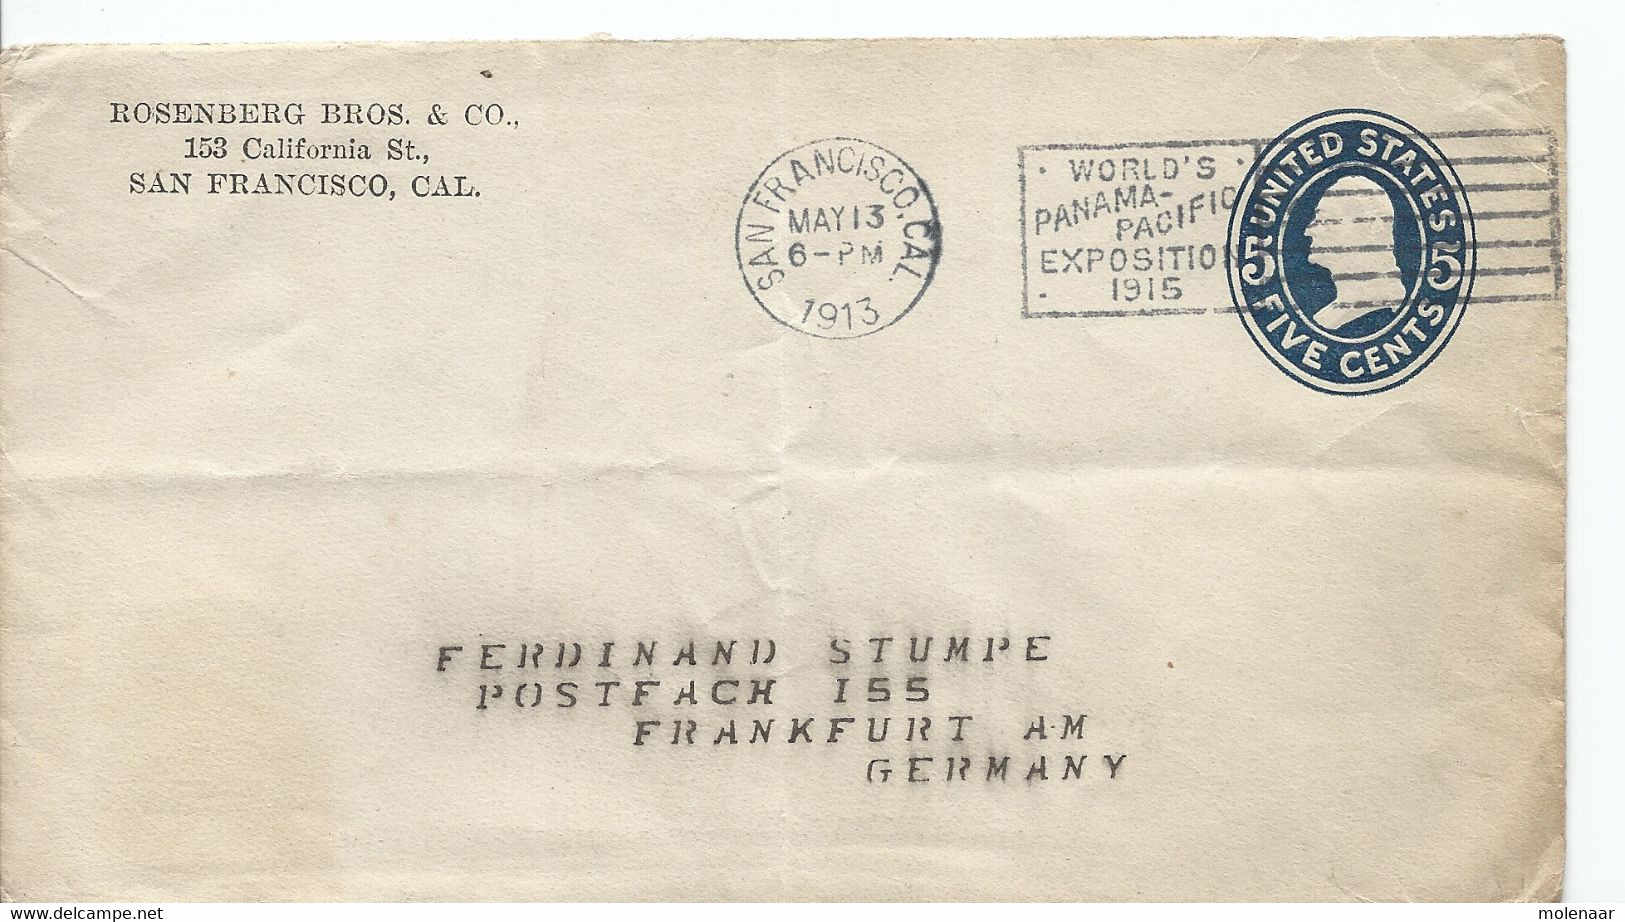 Verenigde Staten Postwaardestuk Uit 1913 5ct Blauw San Fransisco May-13-1913 (6050) - 1901-20